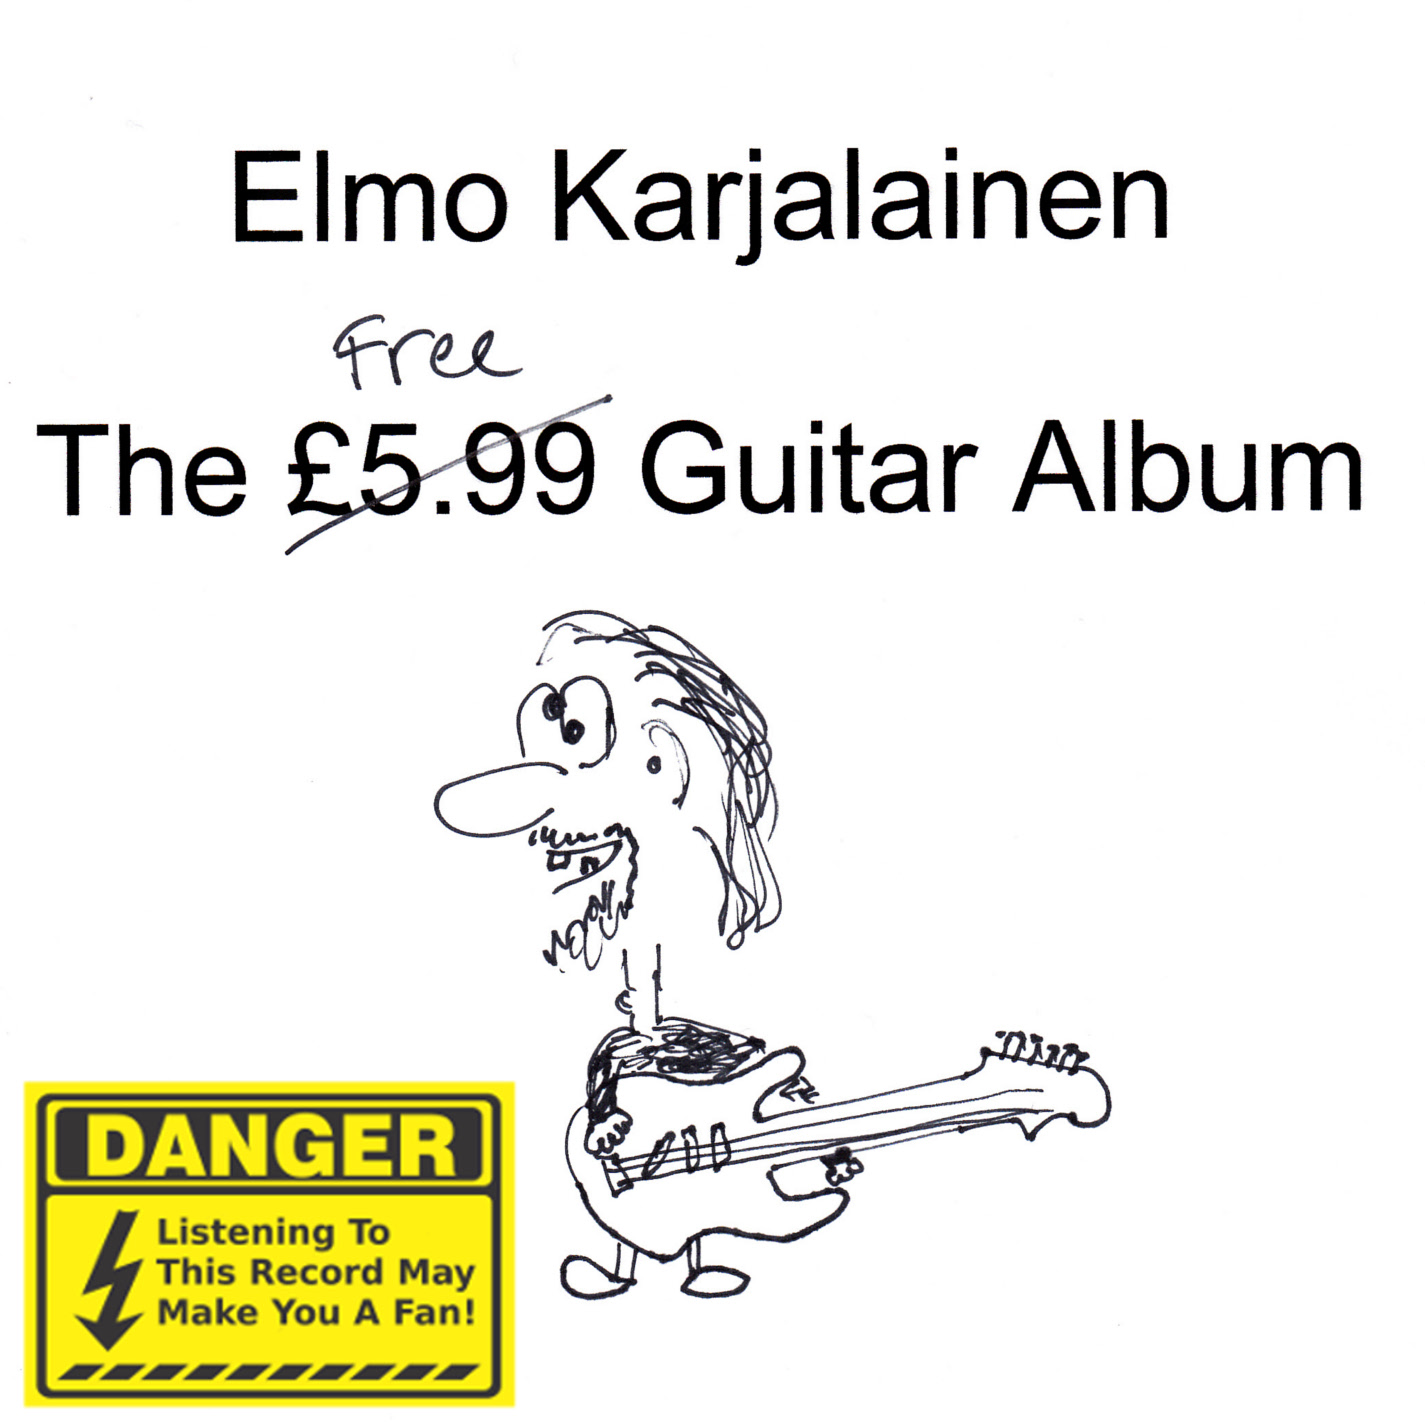  Elmo Karjalainen – The Free Guitar Album